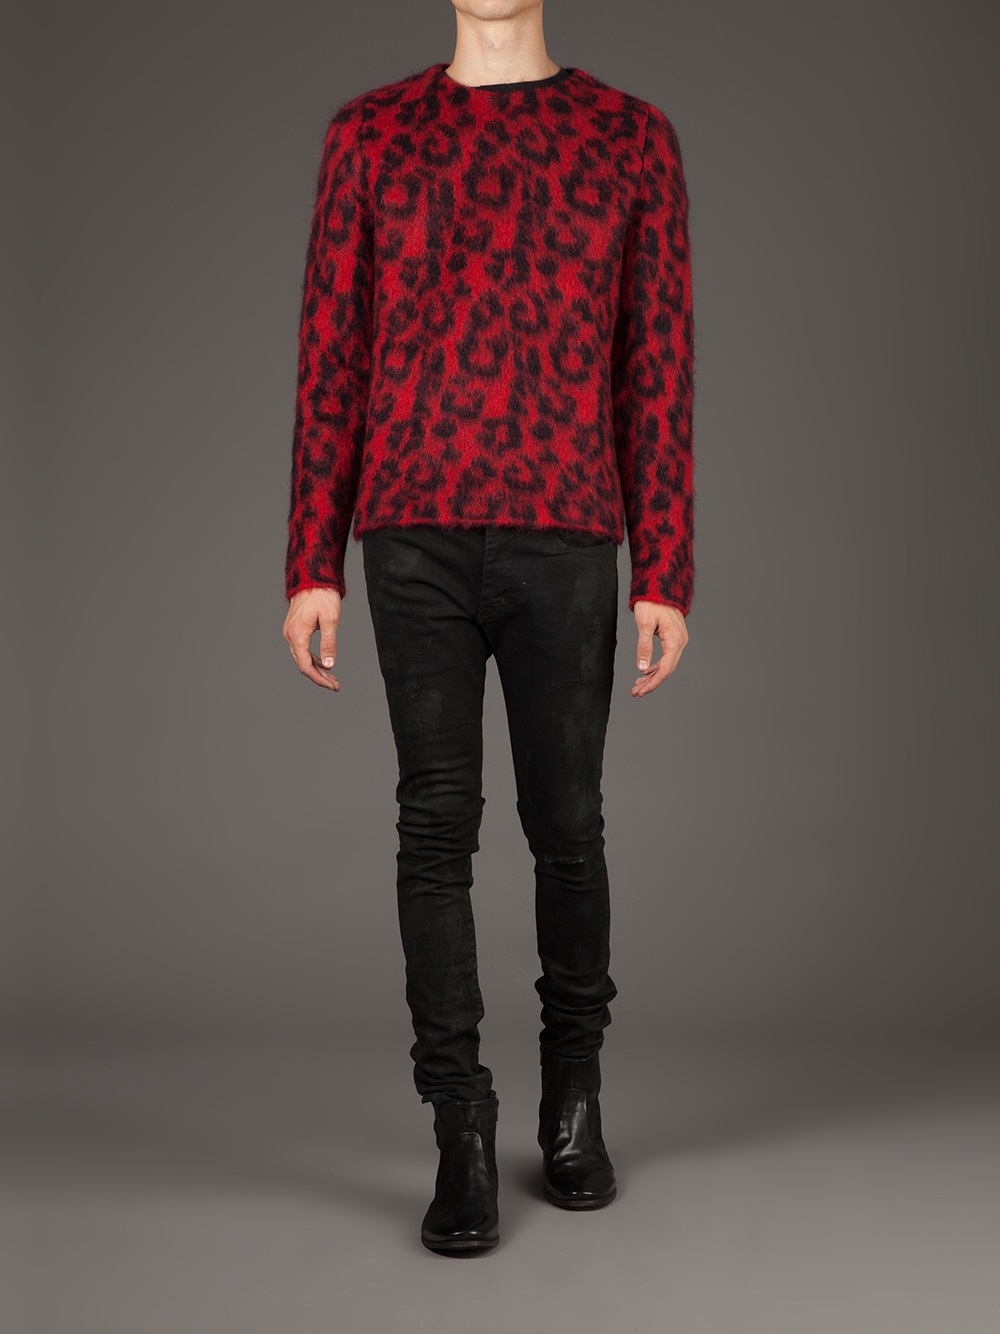 Saint Laurent Leopard Print Sweater in Red for Men - Lyst